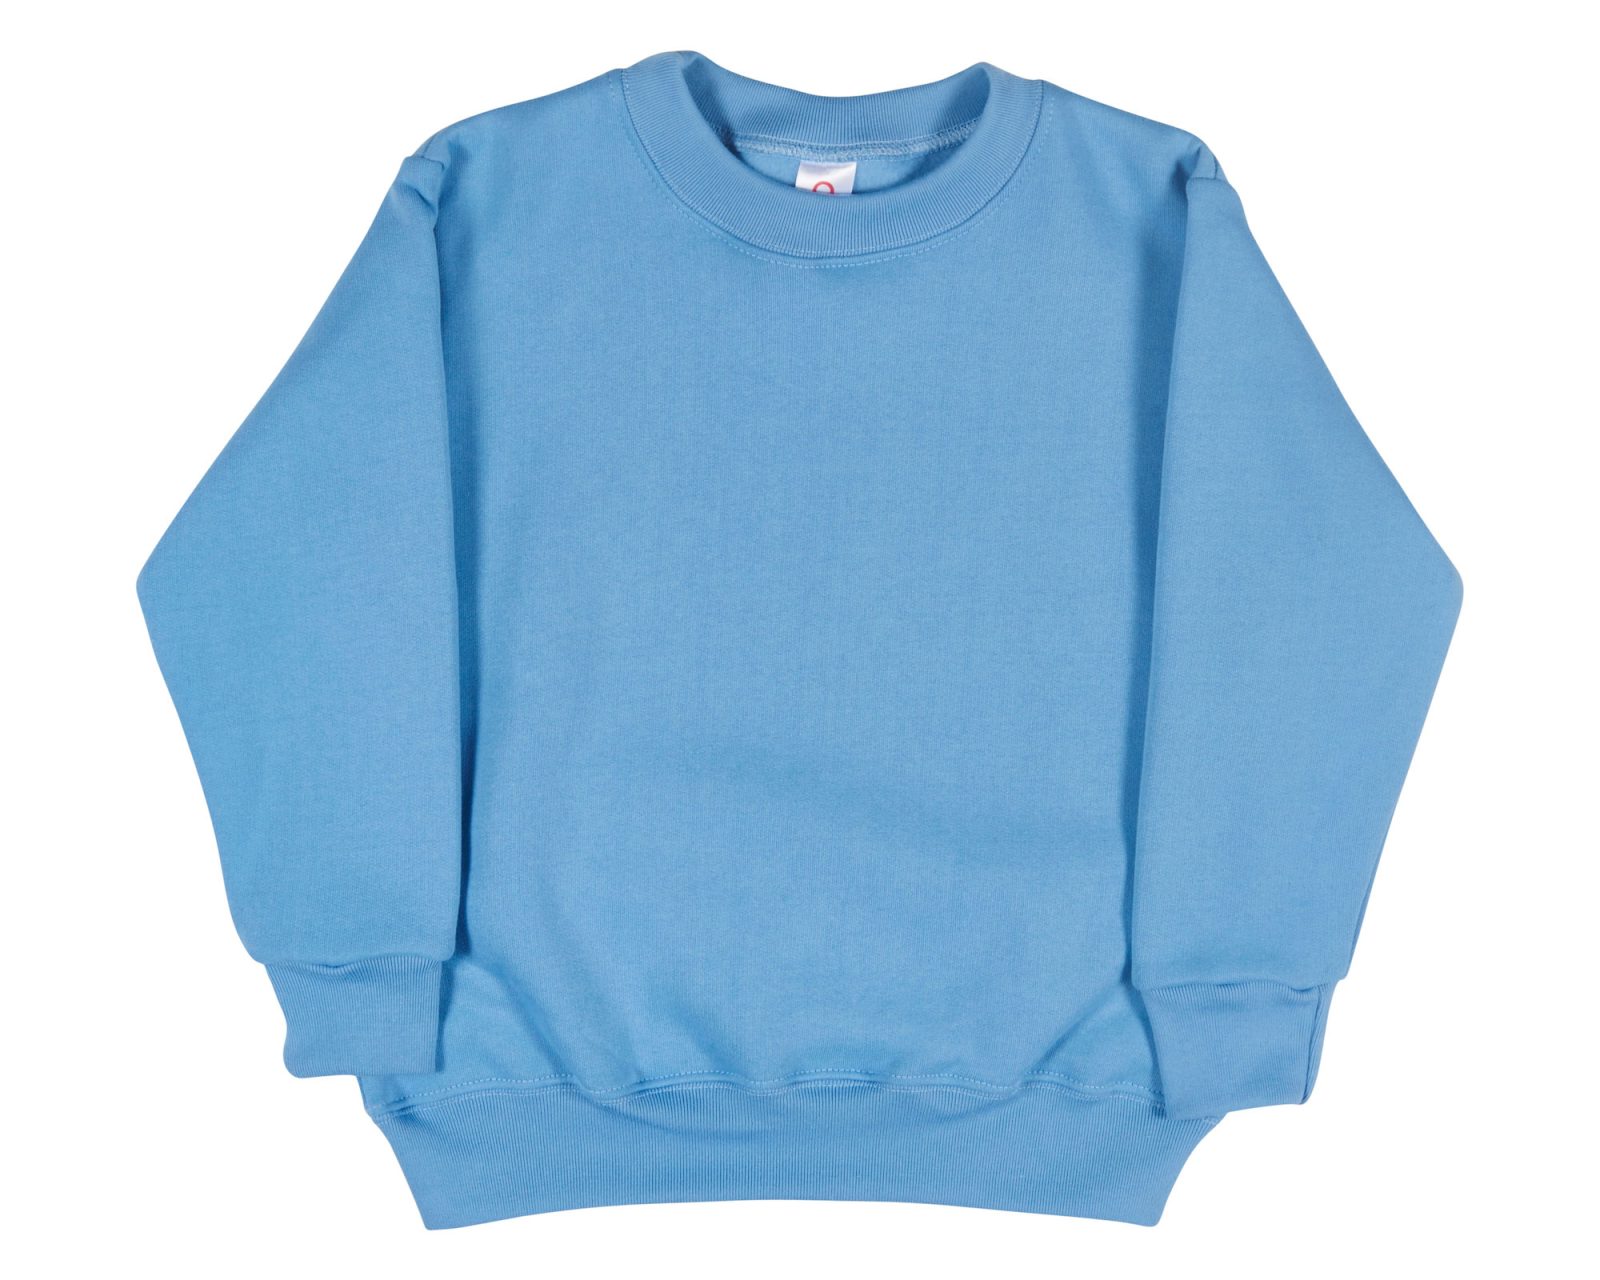 Qualitops Kids Classic Sweater Australian made